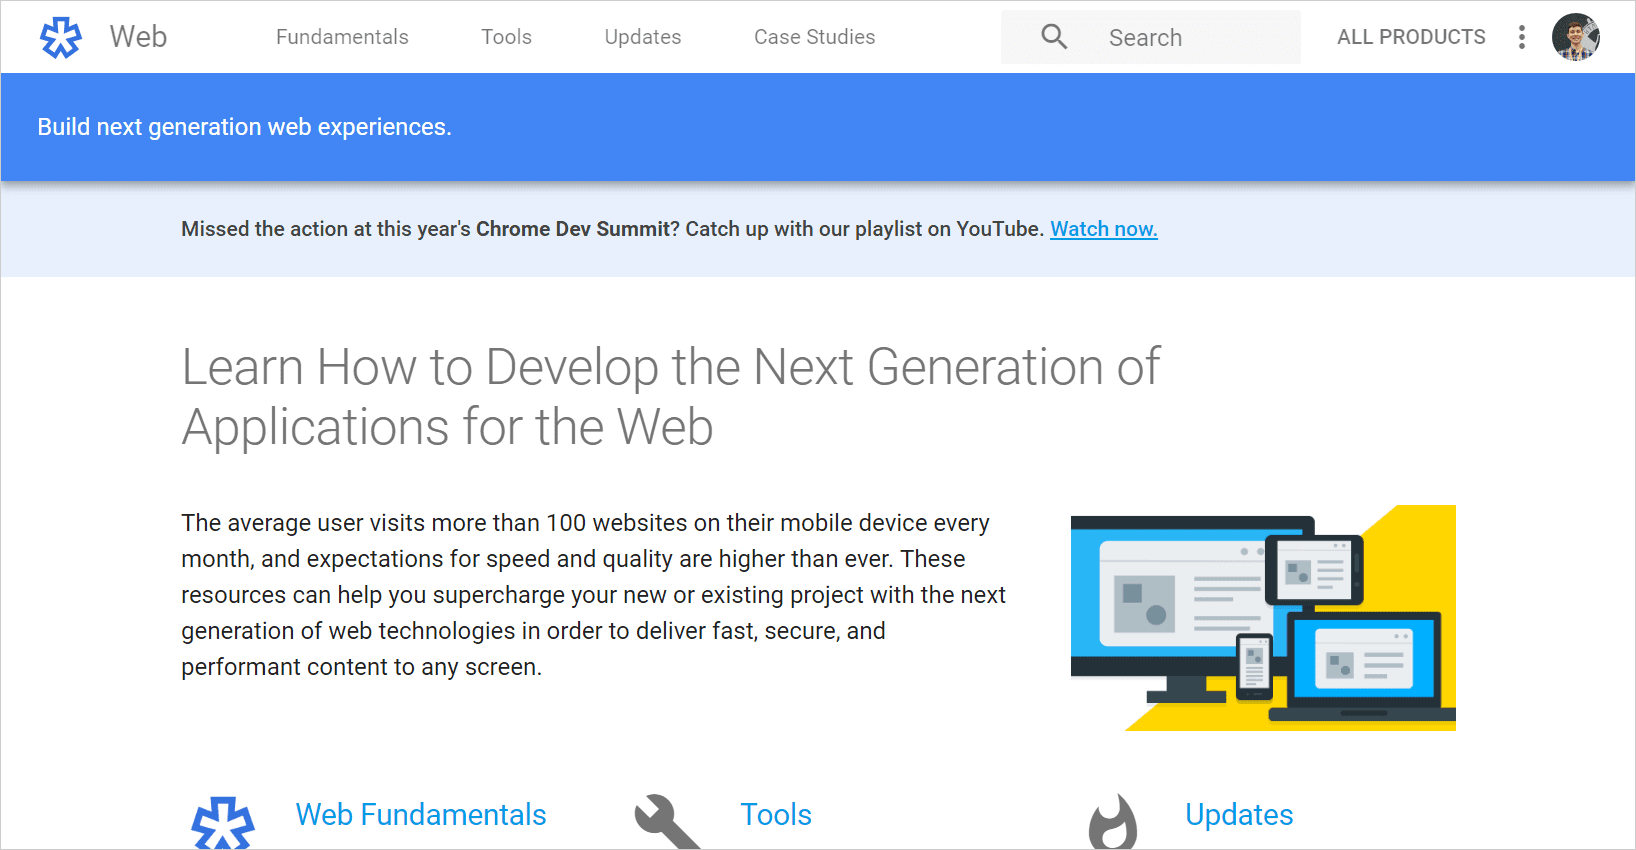 A WebFundamentals home page